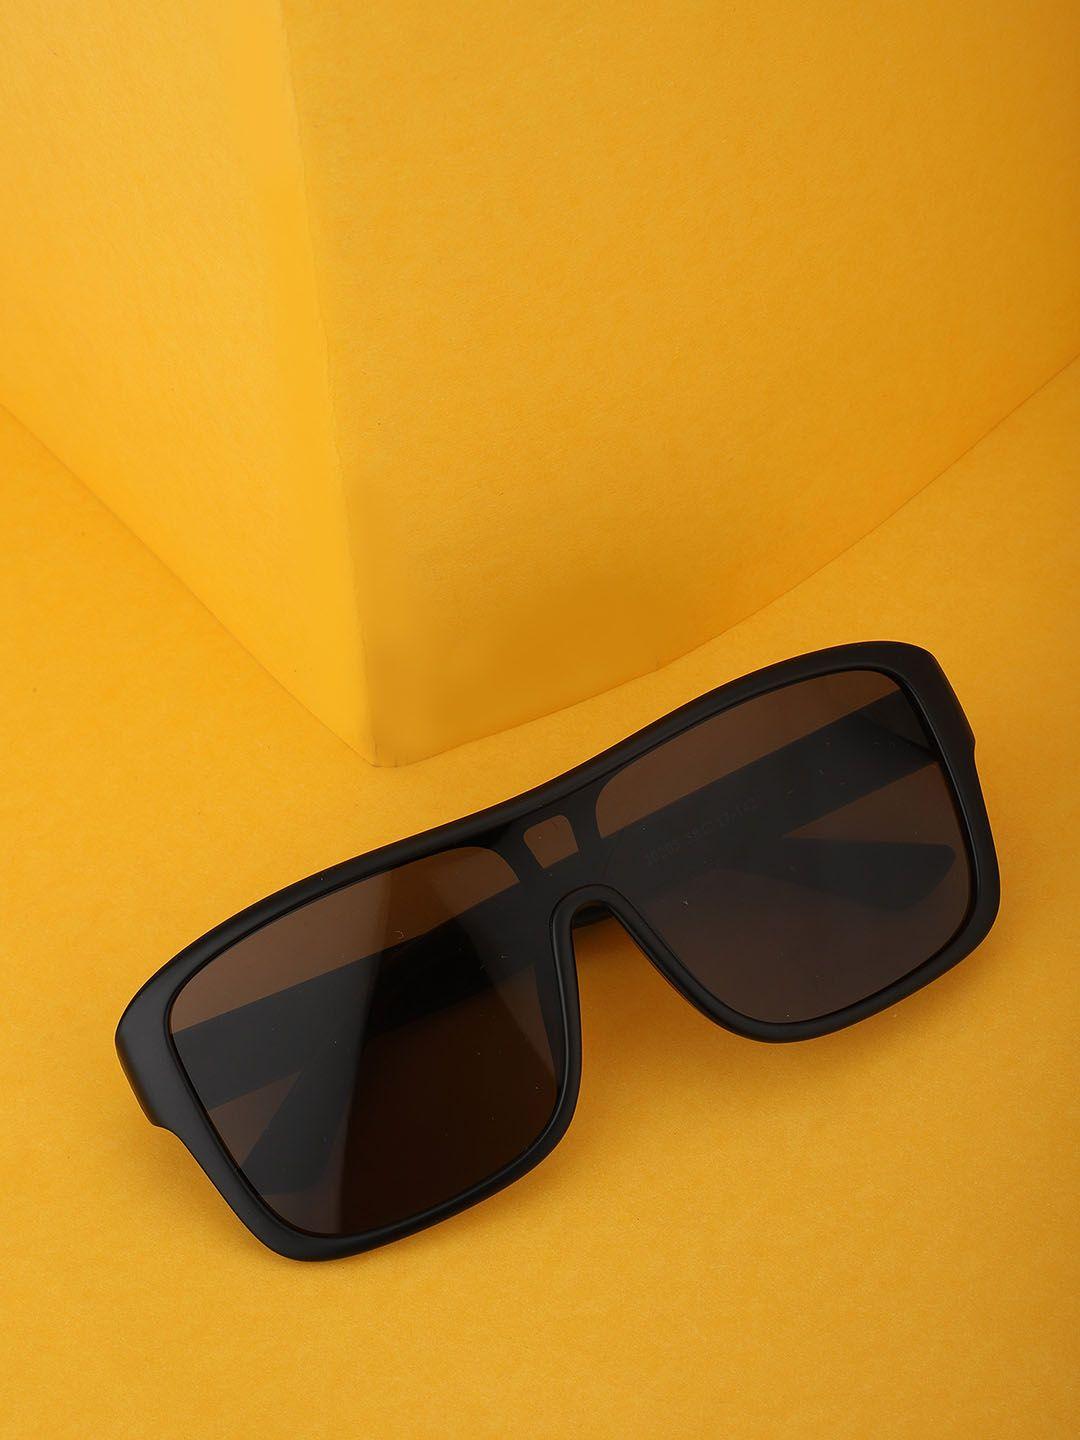 carlton london women grey lens & black shield sunglasses